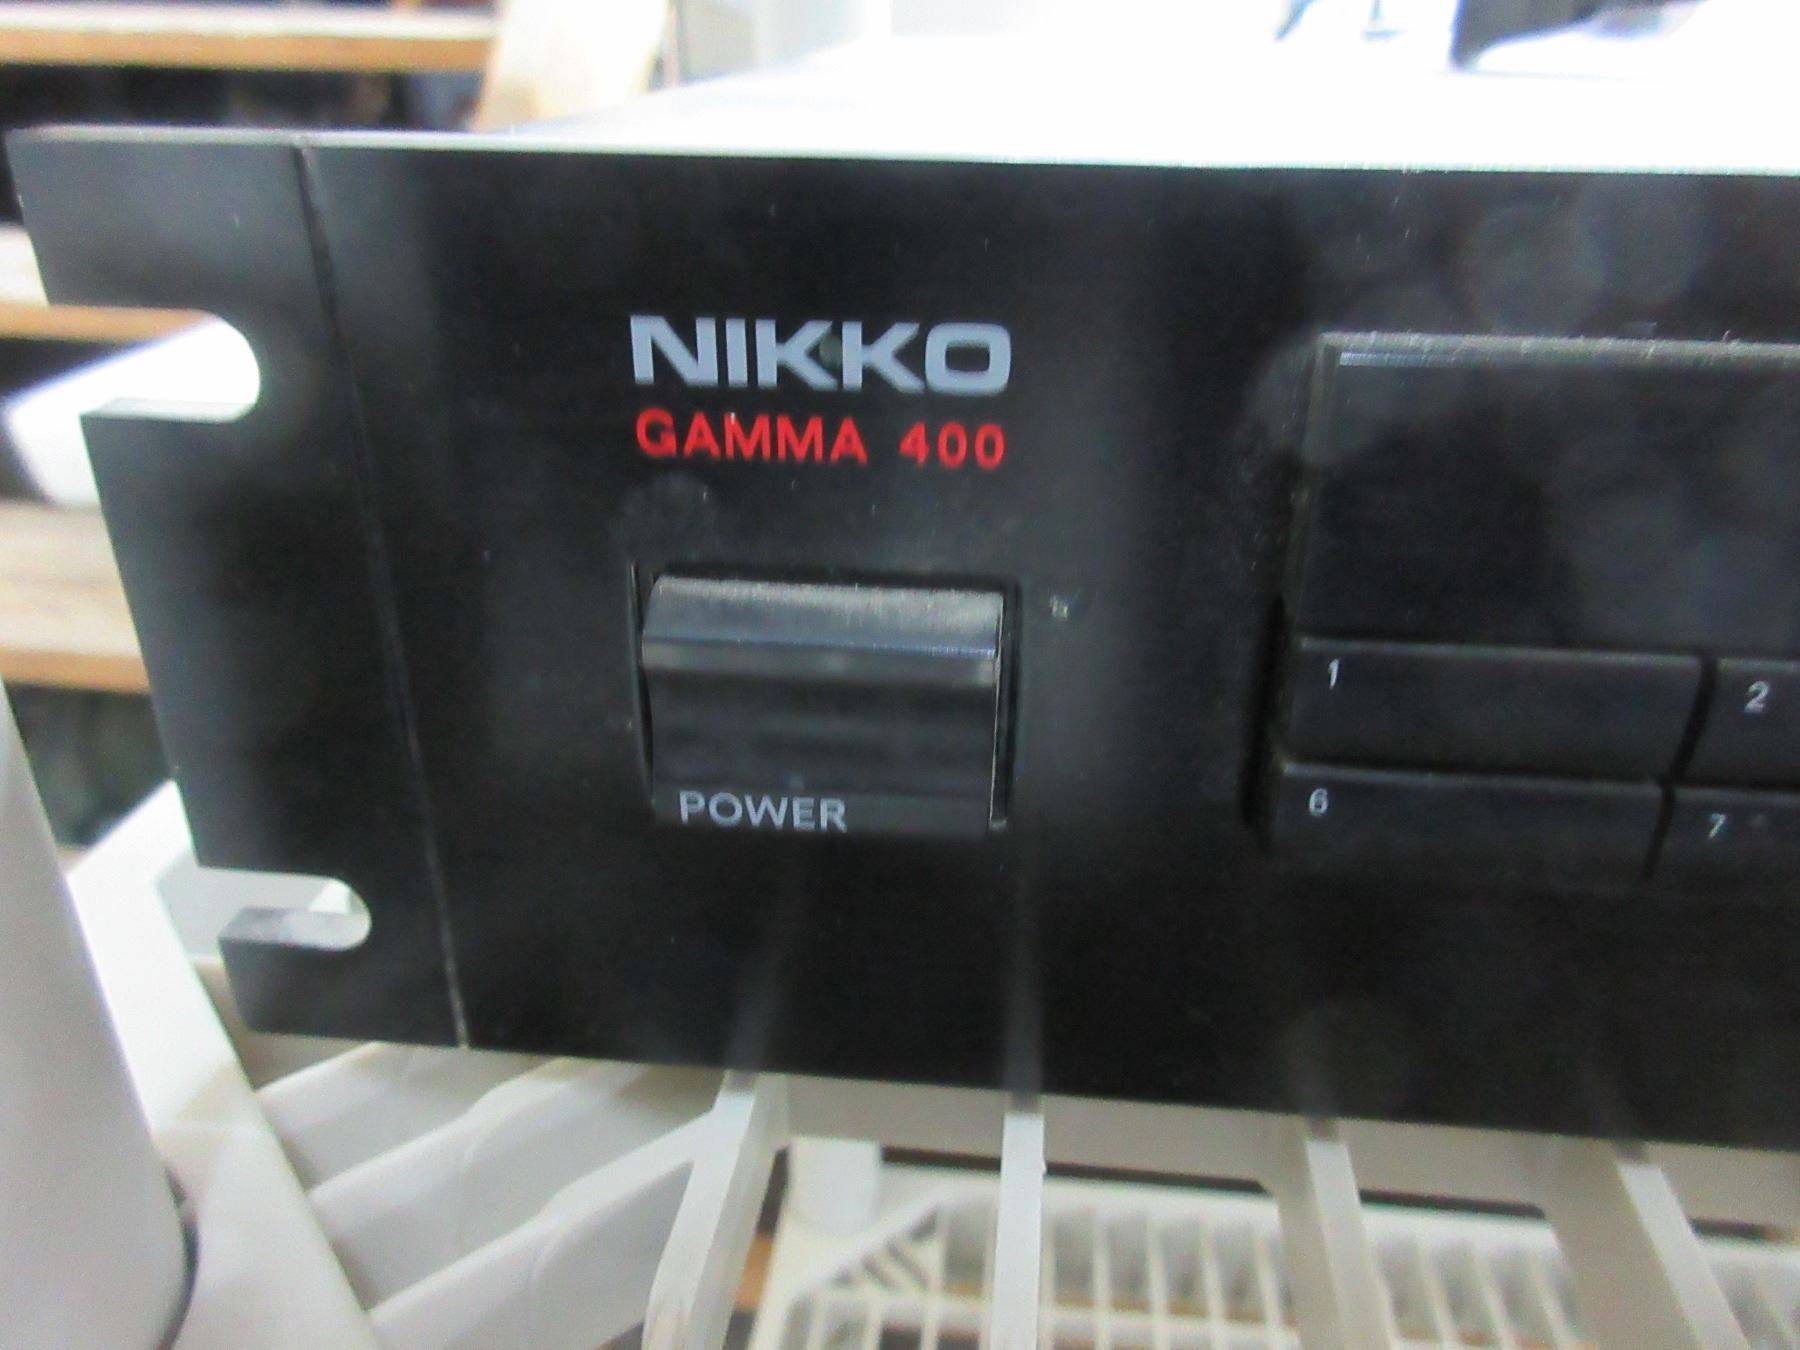 Nikko Gamma 400